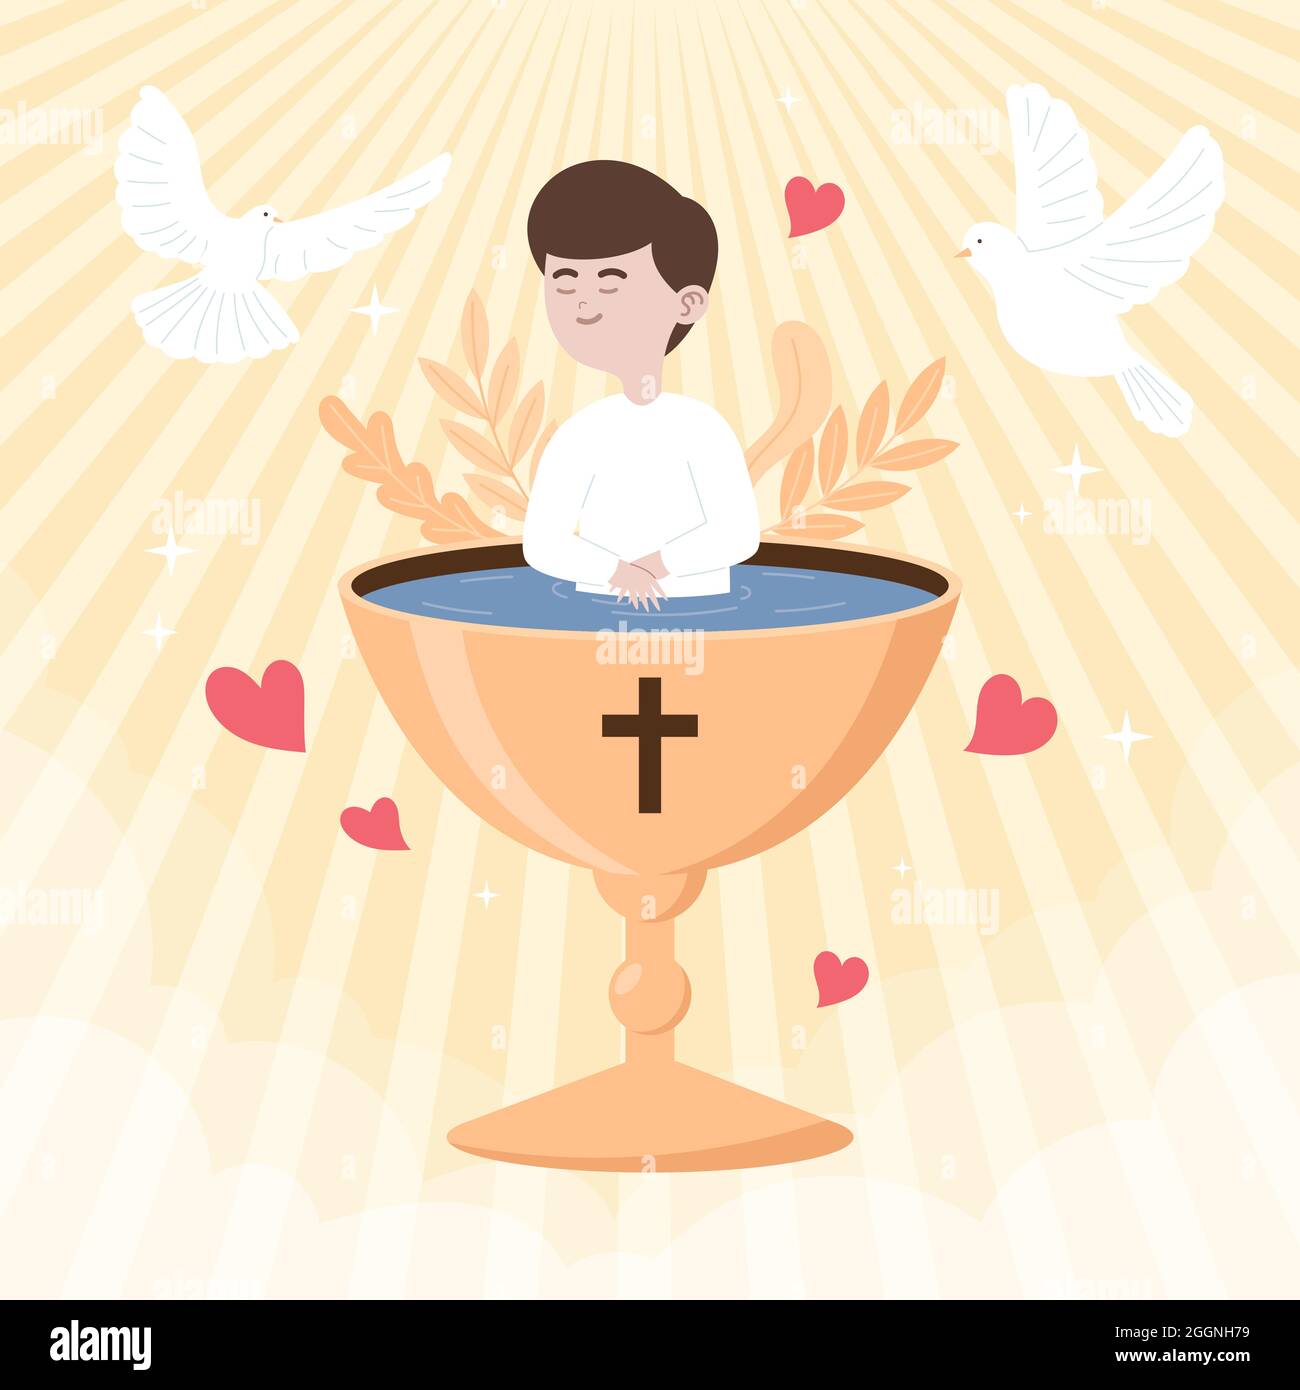 Flat baptism concept illustration Vector illustration Stock Vector ...